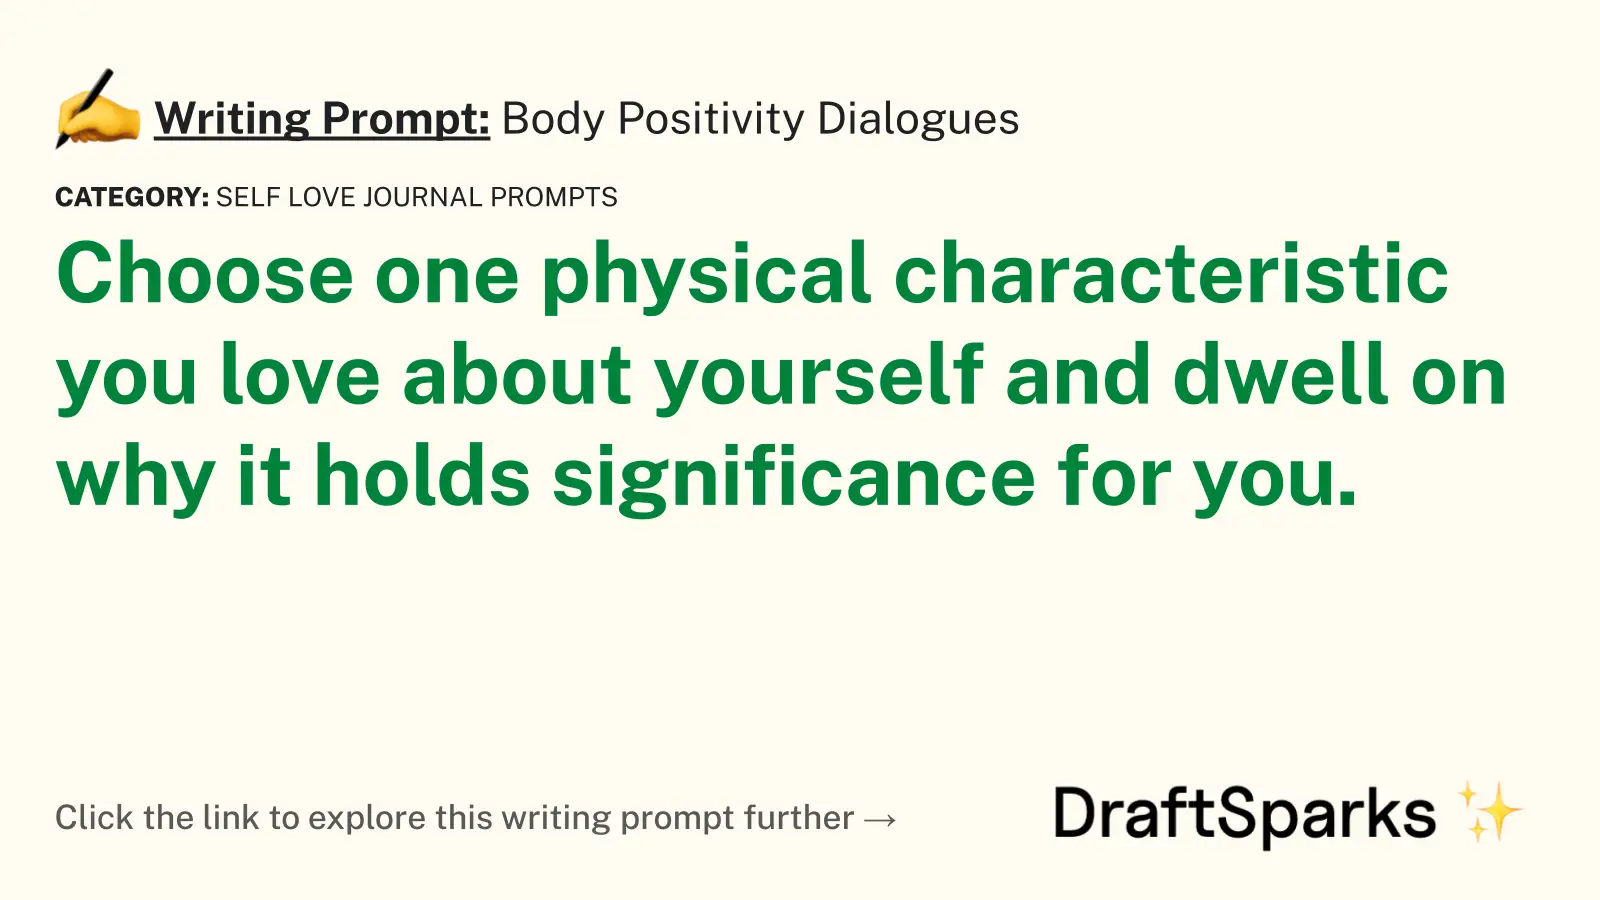 Body Positivity Dialogues